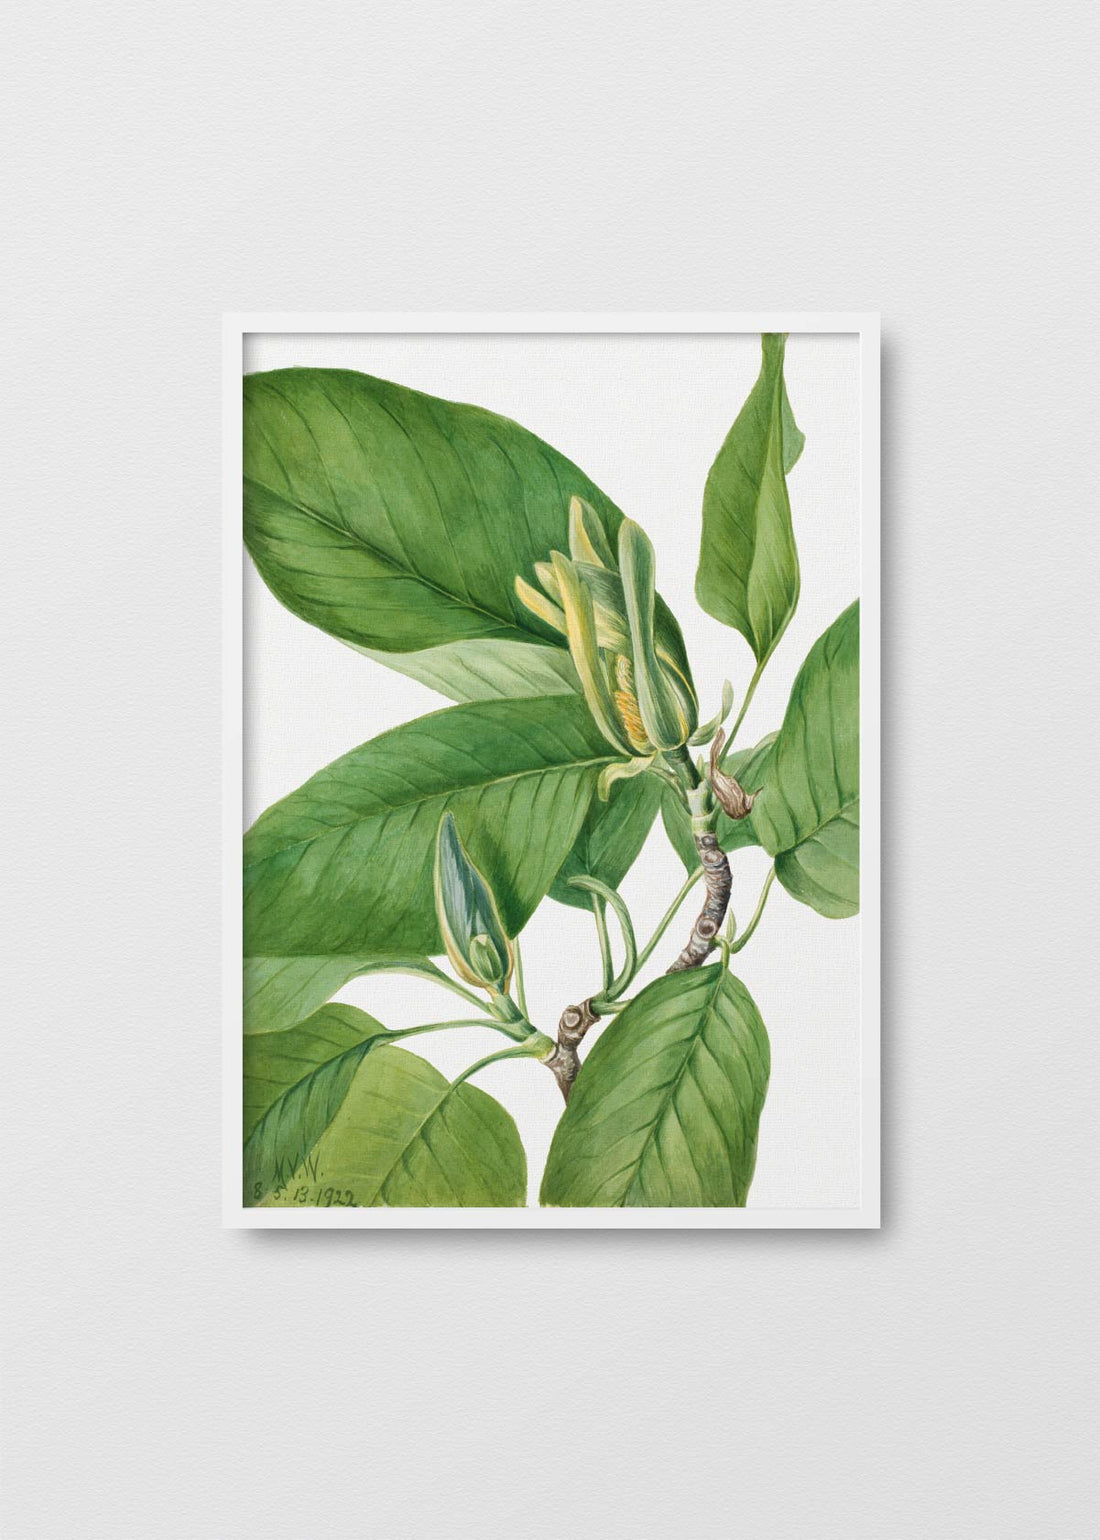 Magnolia acuminata - Testimoniaprints